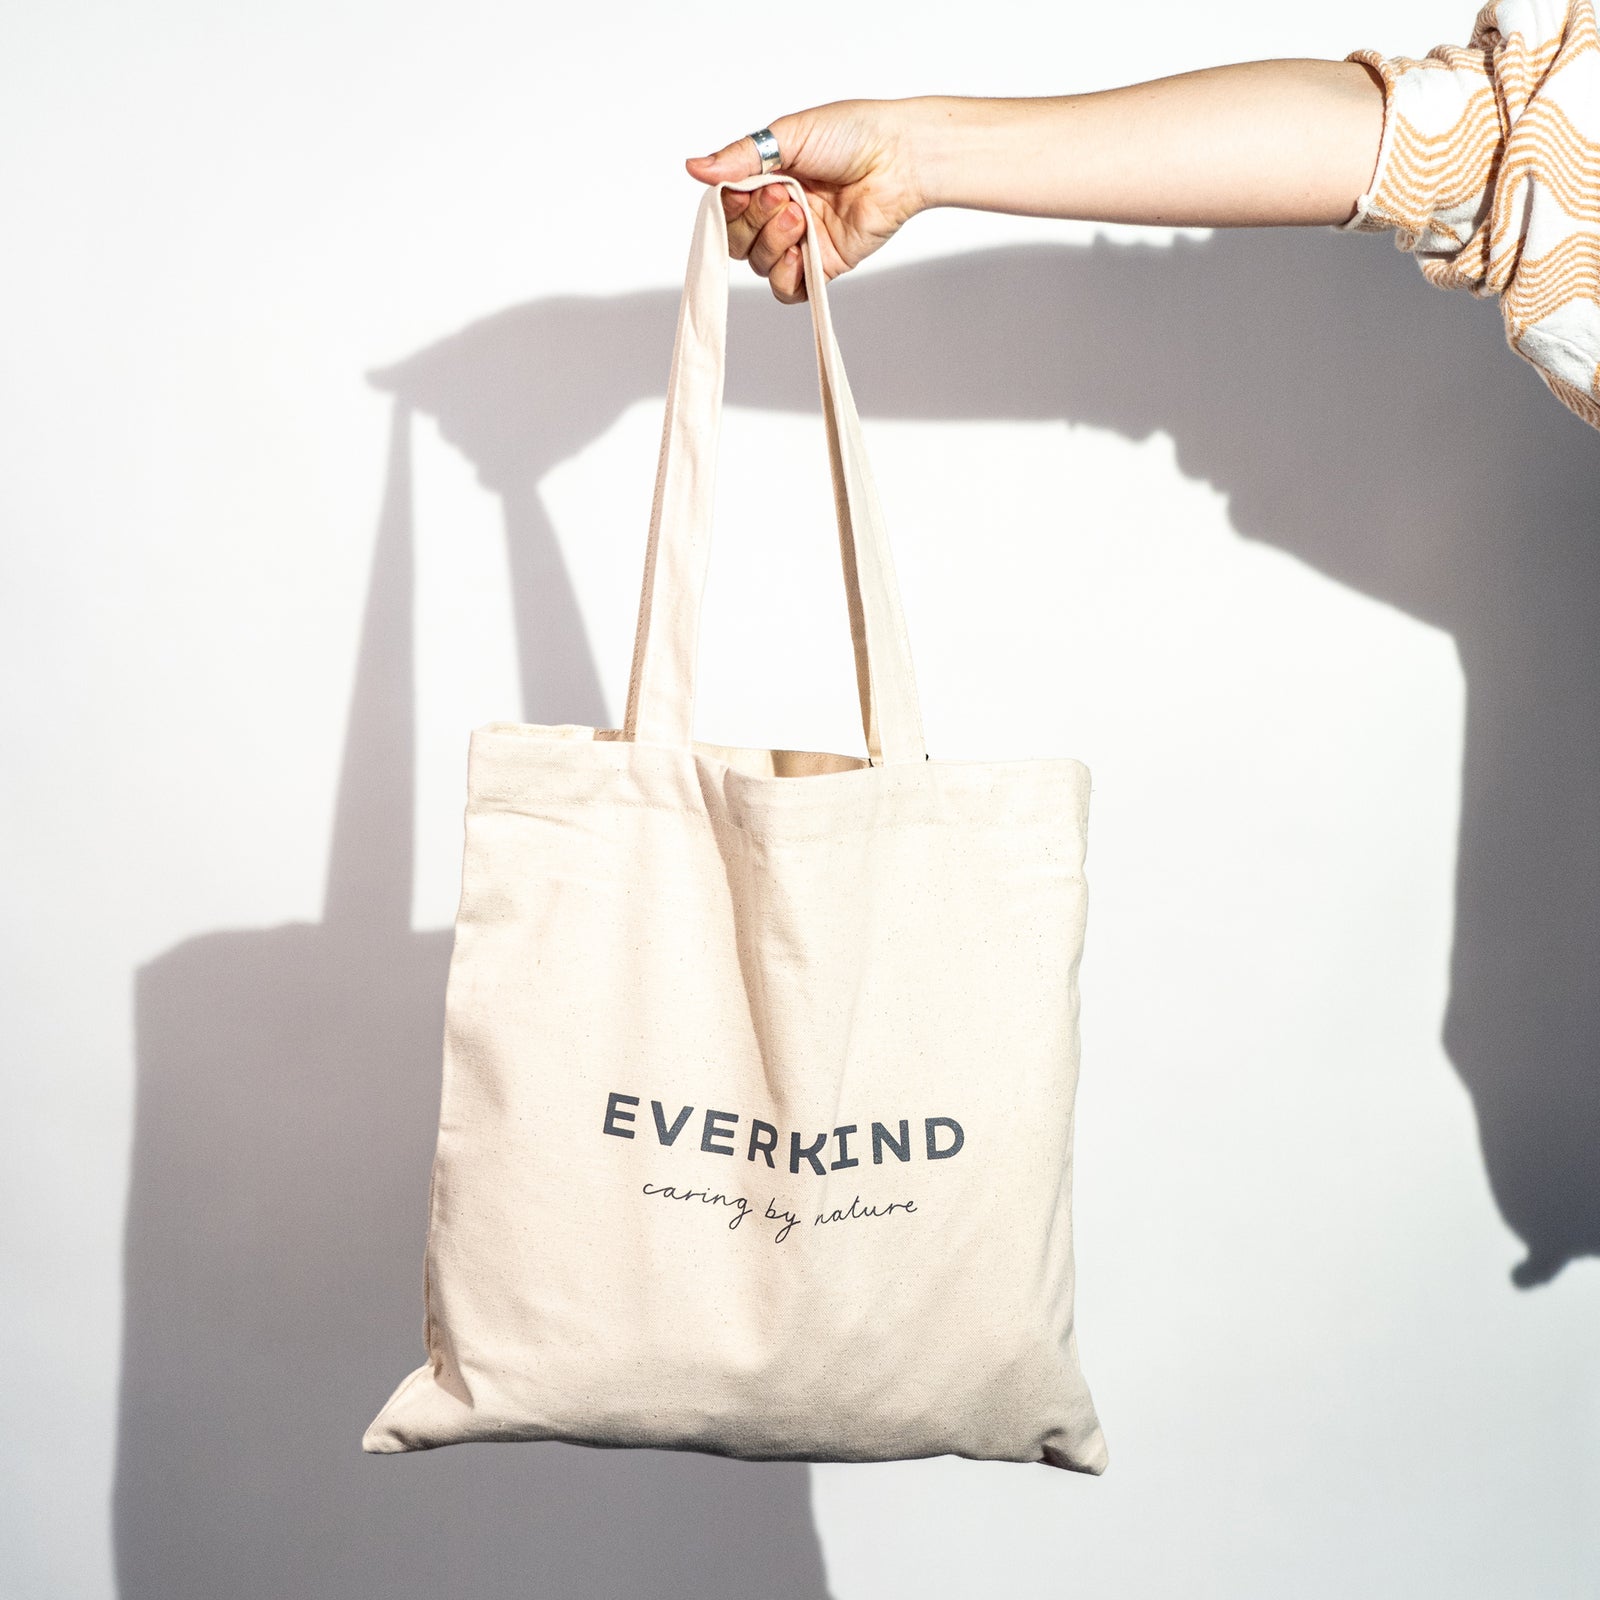 everkind-organic-tote-bag-doing-good-in-the-world-made-by-joyya